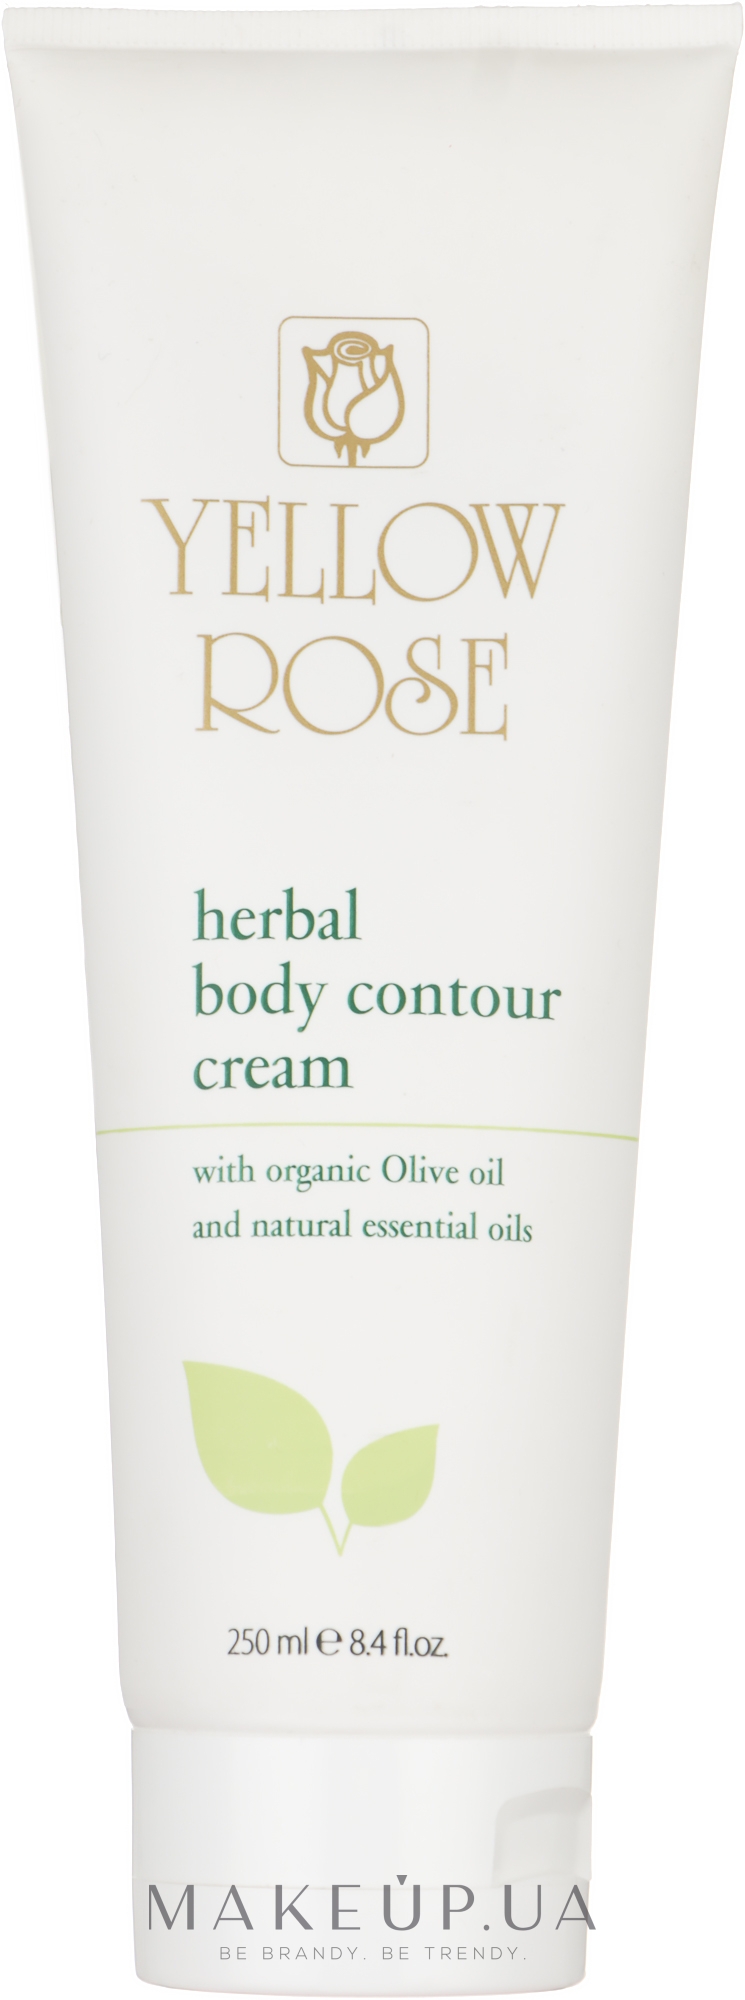 Травяной крем для тела - Yellow Rose Herbal Body Contour Cream — фото 250ml